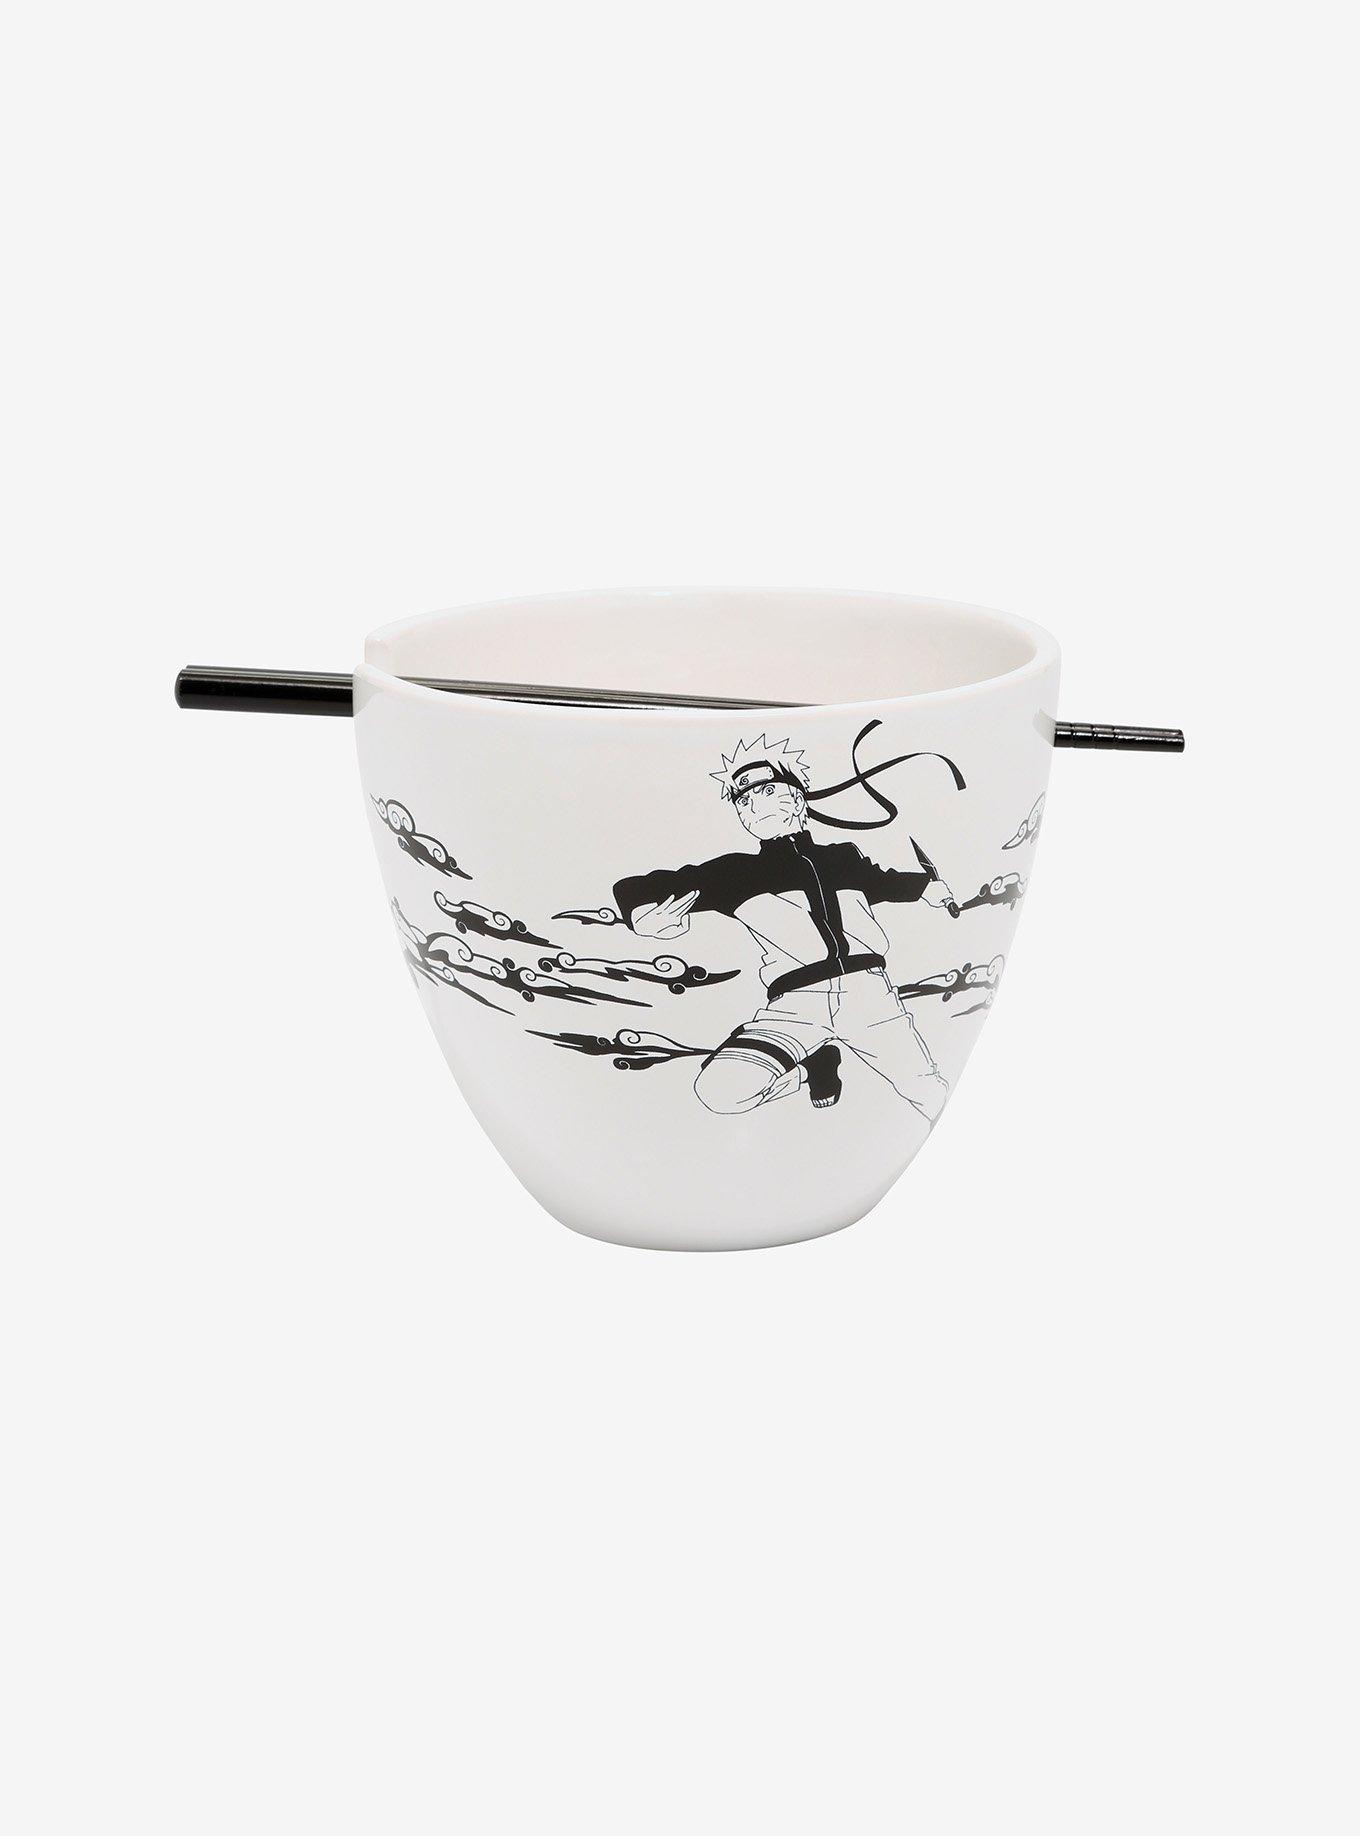 Anime One Piece Bowl Set with Chopsticks Straw Hat Ceramic Ramen Bowl Set  Mercha